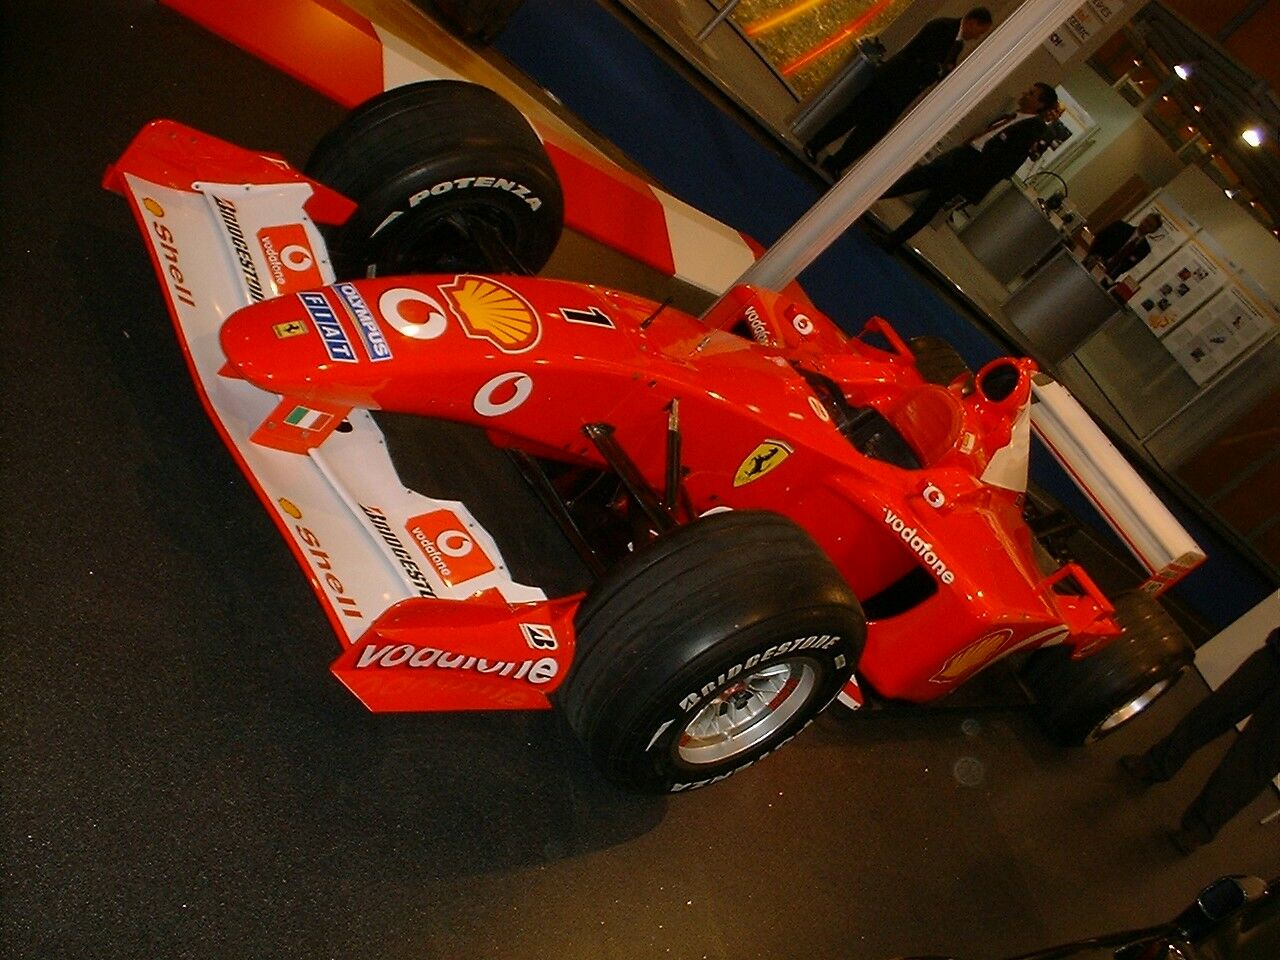 Michael Schumacher's F1 World Championship Ferrari at the 2003 Frankfurt Motor Show